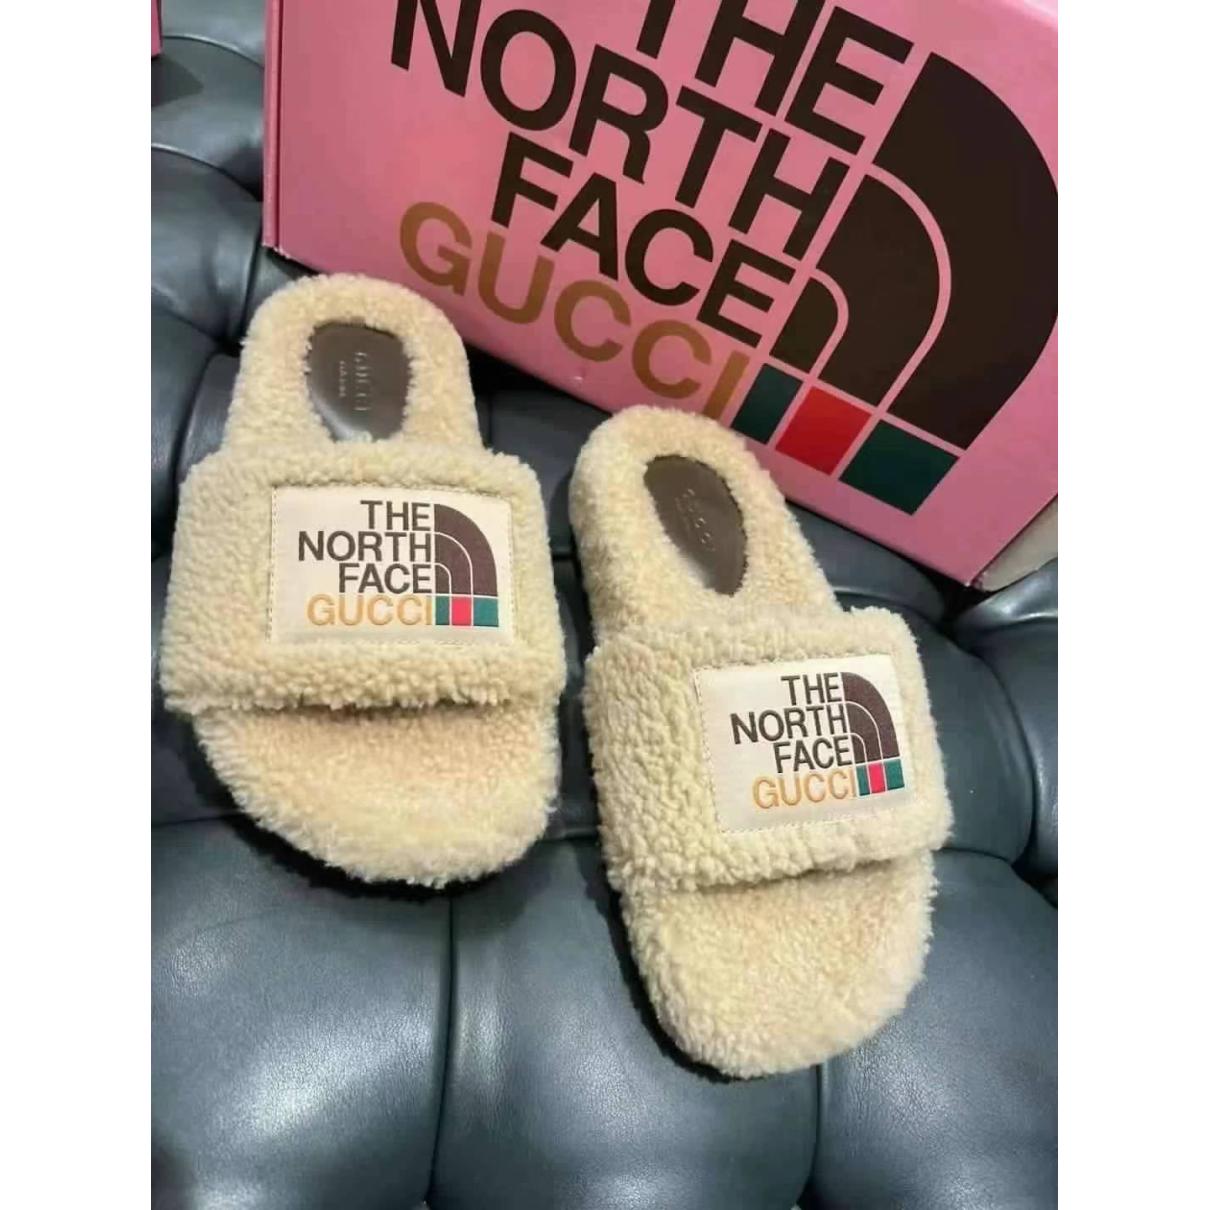 The North Face x Gucci - Shearling flats - 7